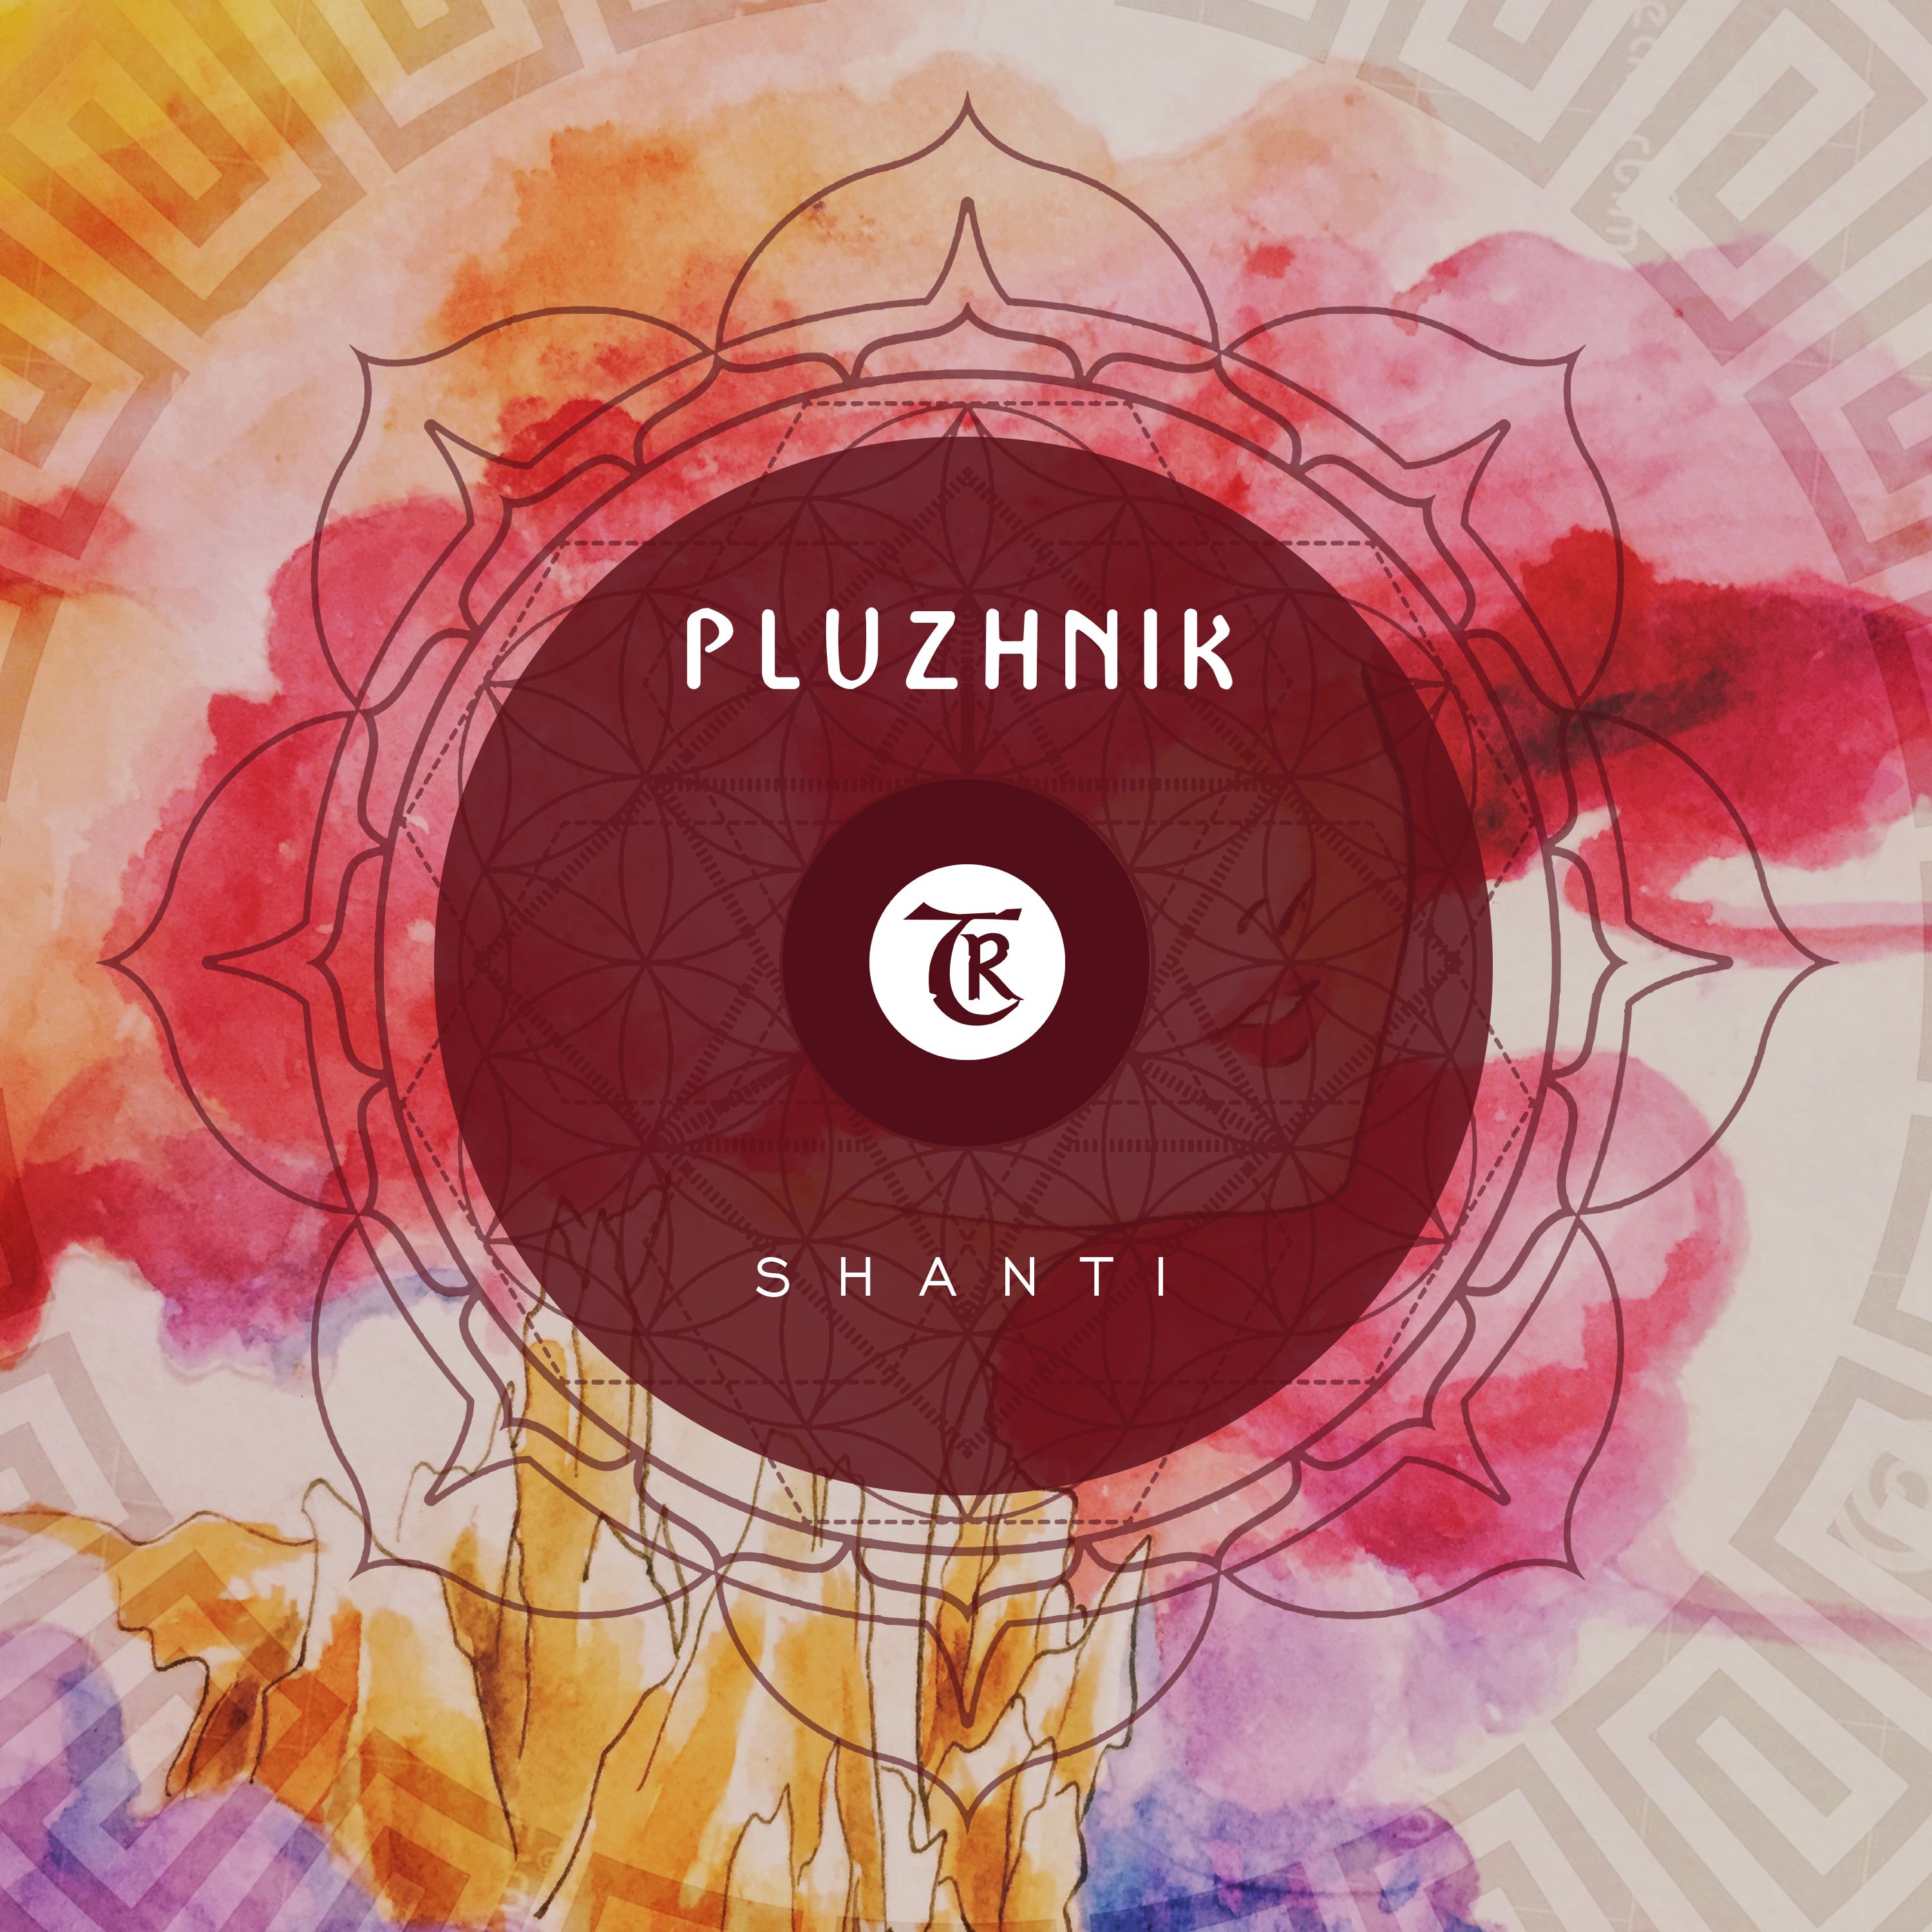 Download Pluzhnik - Shiv [Tibetania Records]